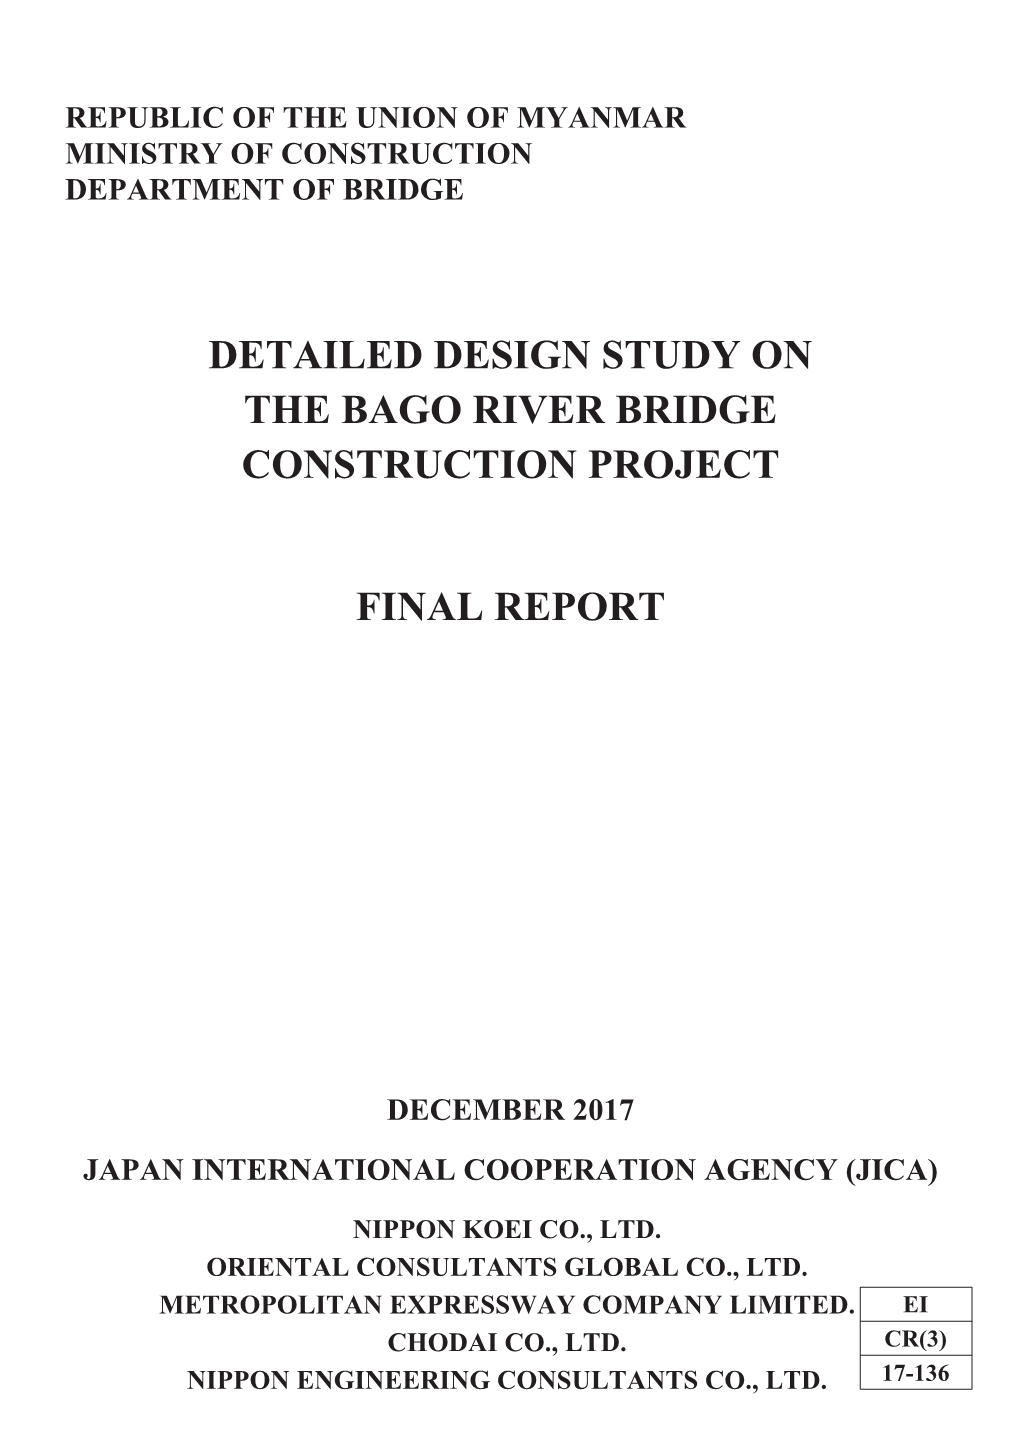 Detailed Design Study on the Bago River Bridge Construction Project